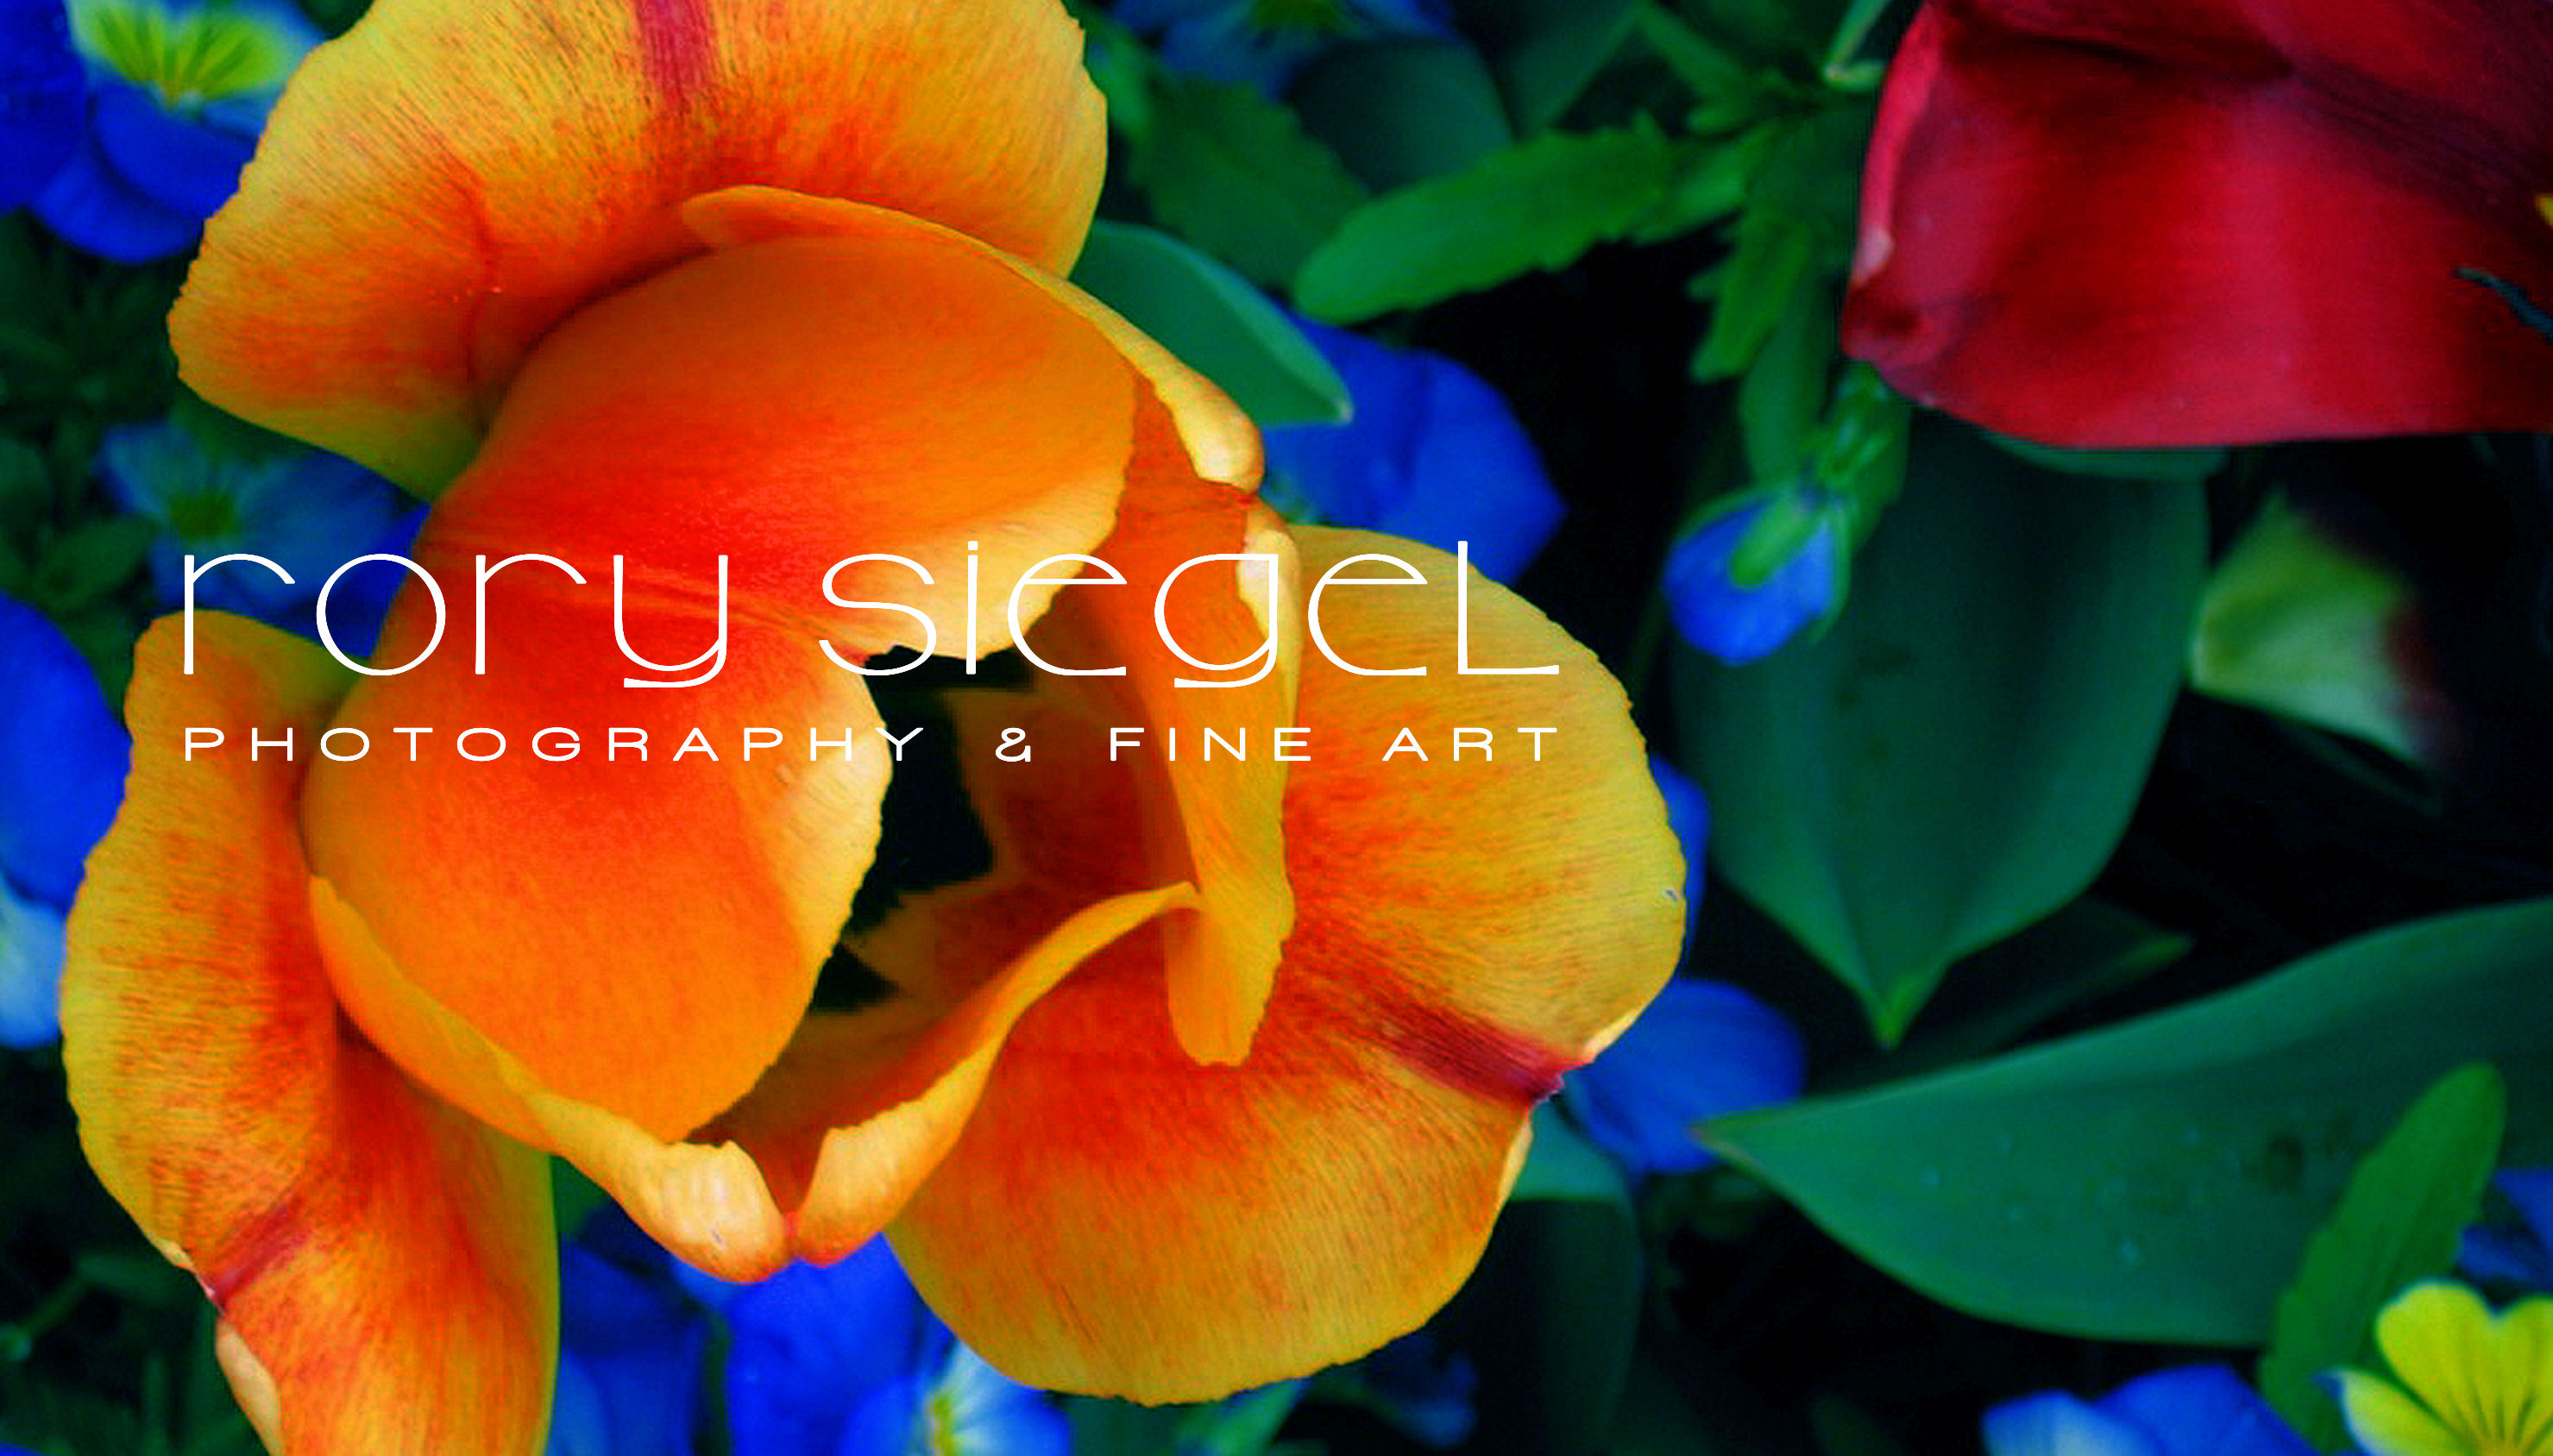 Rory Siegel - Artist Website